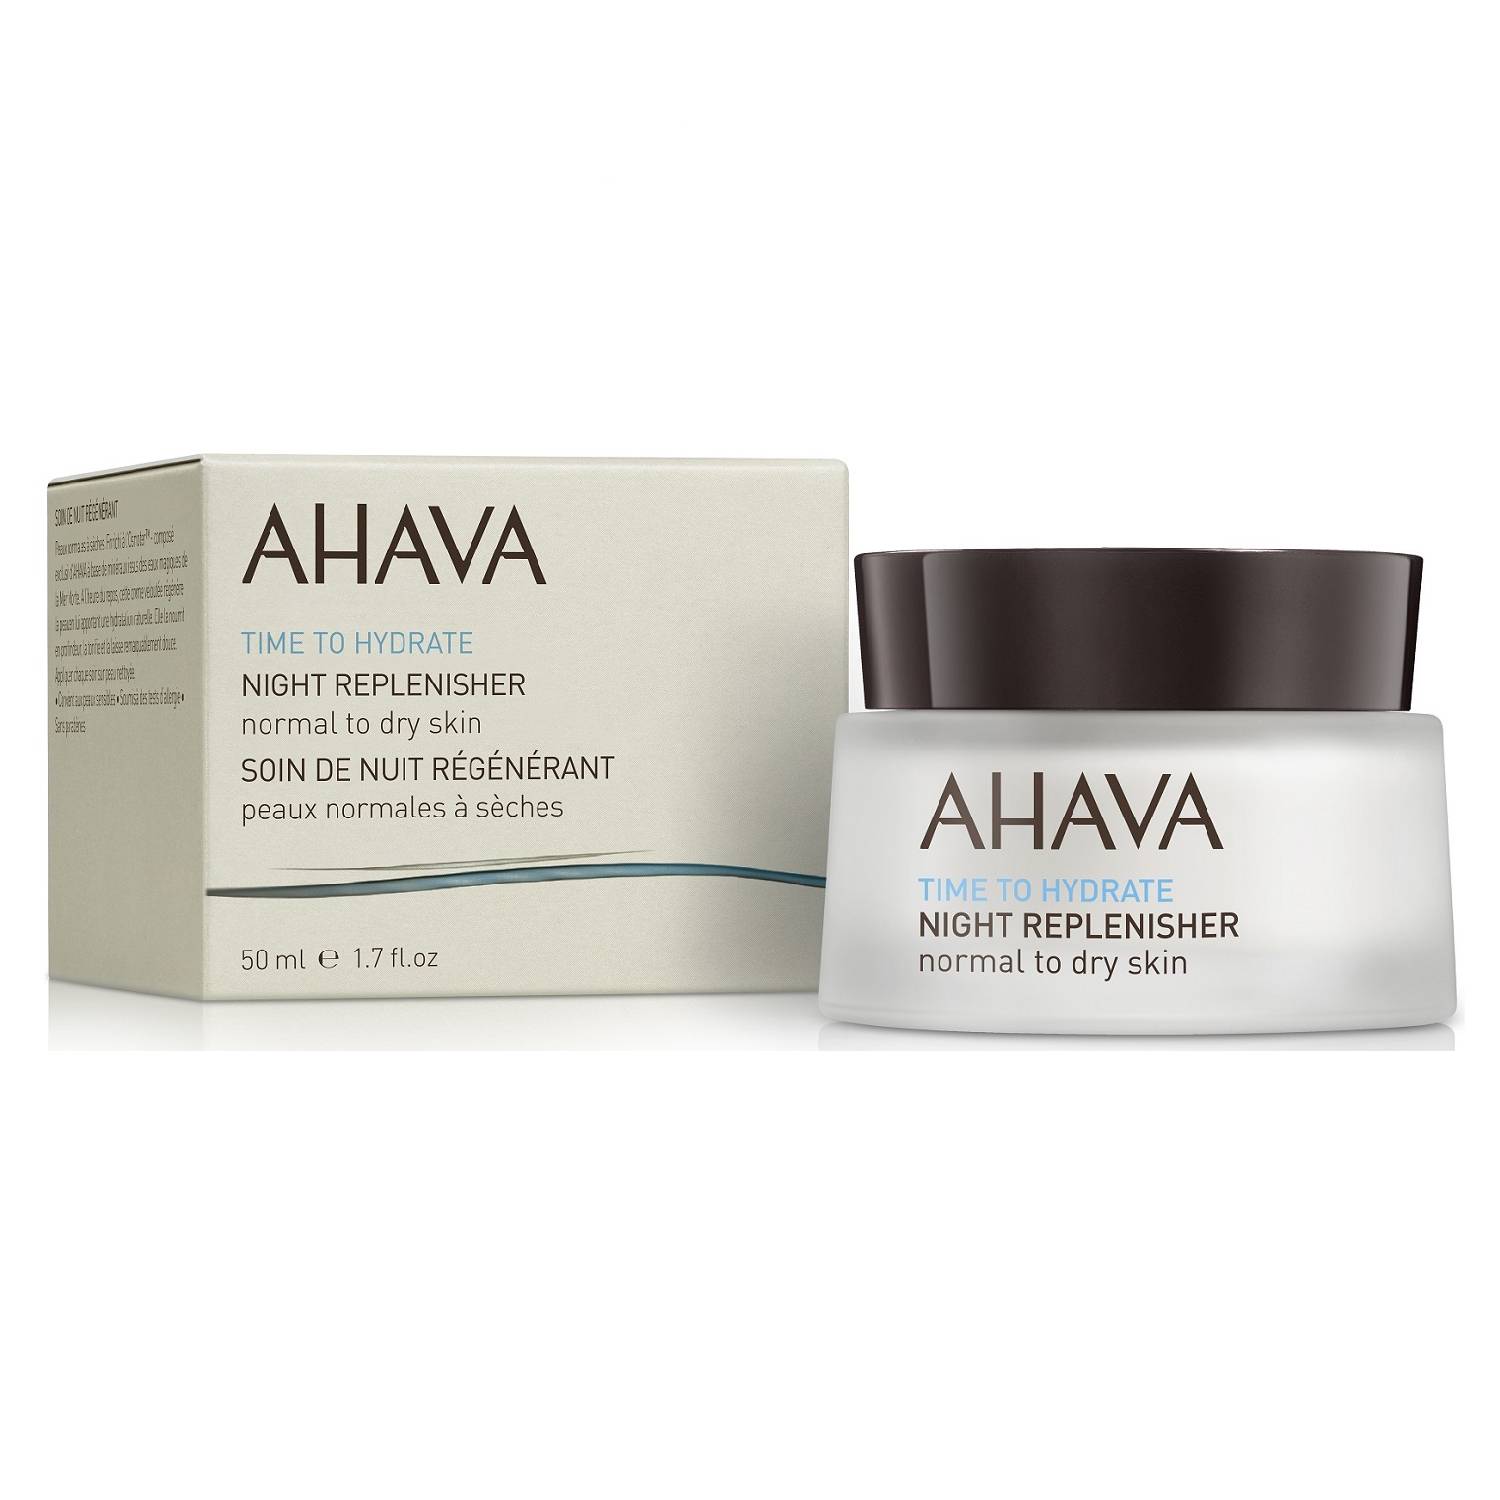 Ahava Ночной восстанавливающий крем для нормальной и сухой кожи Night Replenisher, 50 мл (Ahava, Time to hydrate)